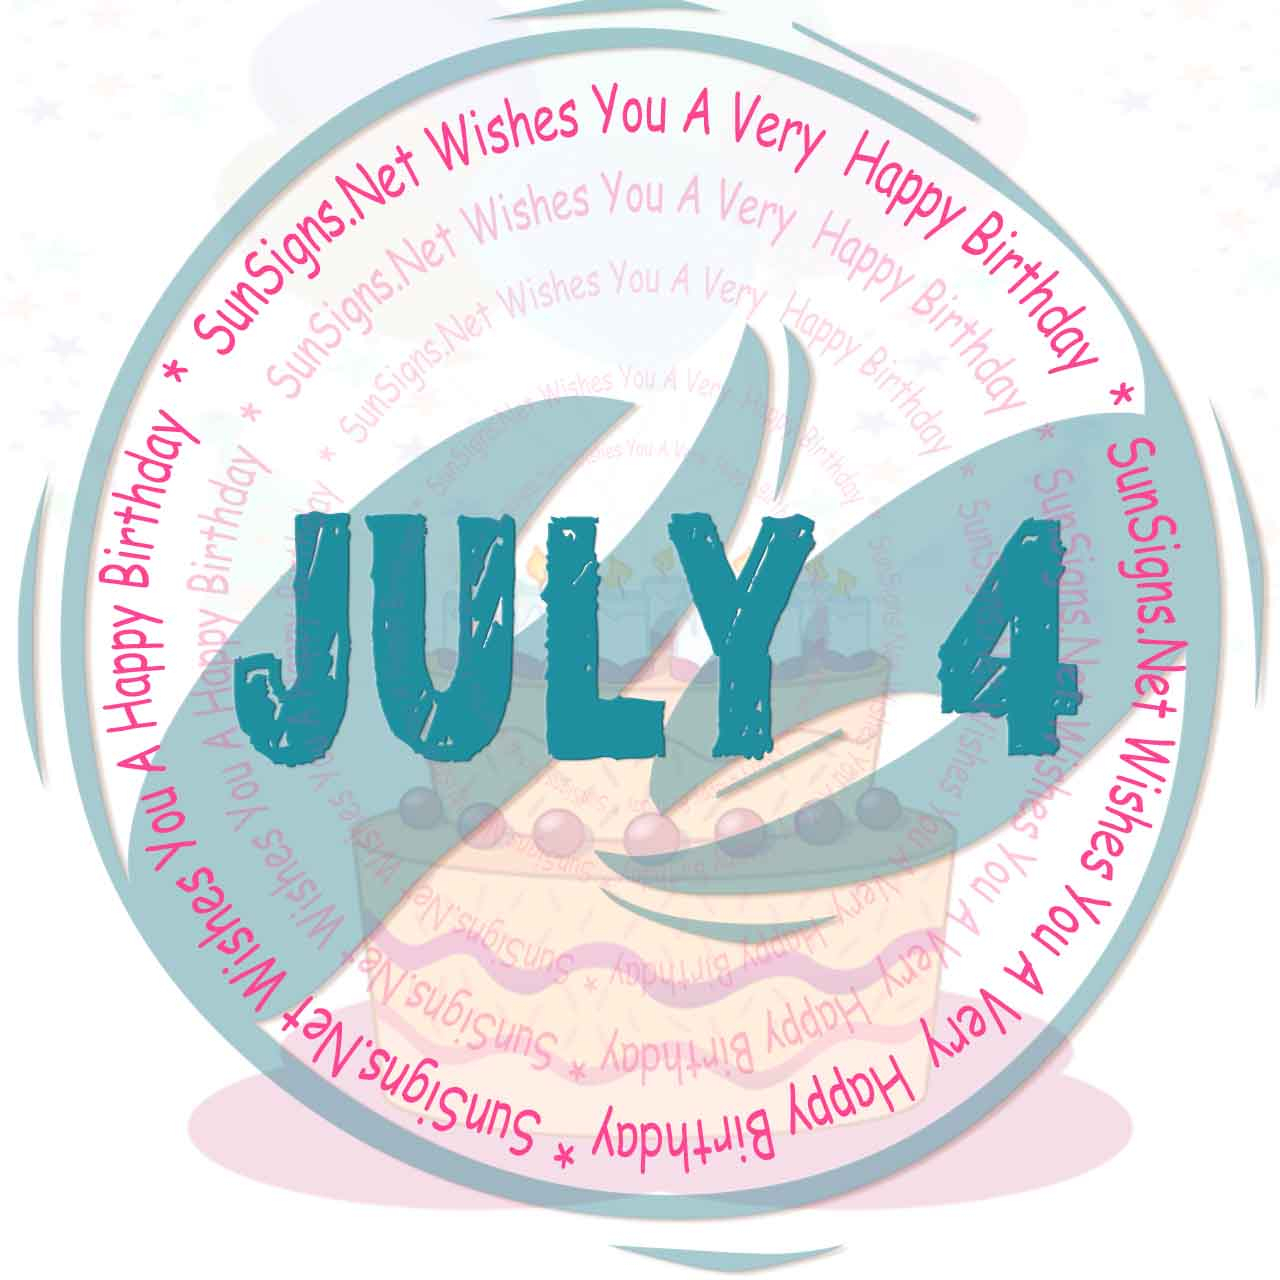 July 4 Zodiac Is Cancer, Birthdays And Horoscope